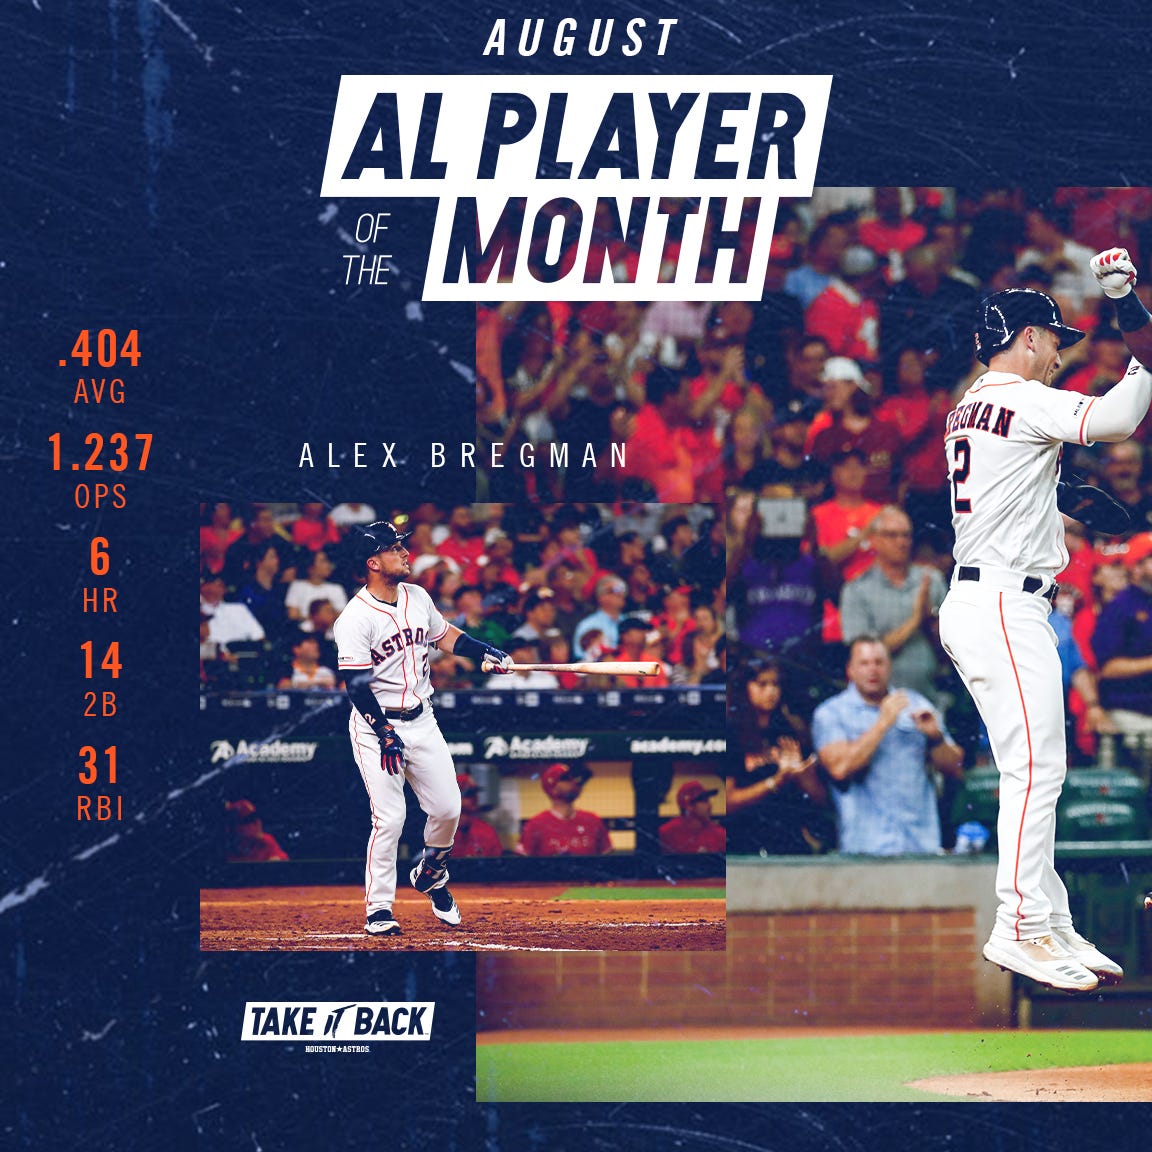 Alvarez, Bregman earn AL Monthly Awards for August, by Houston Astros